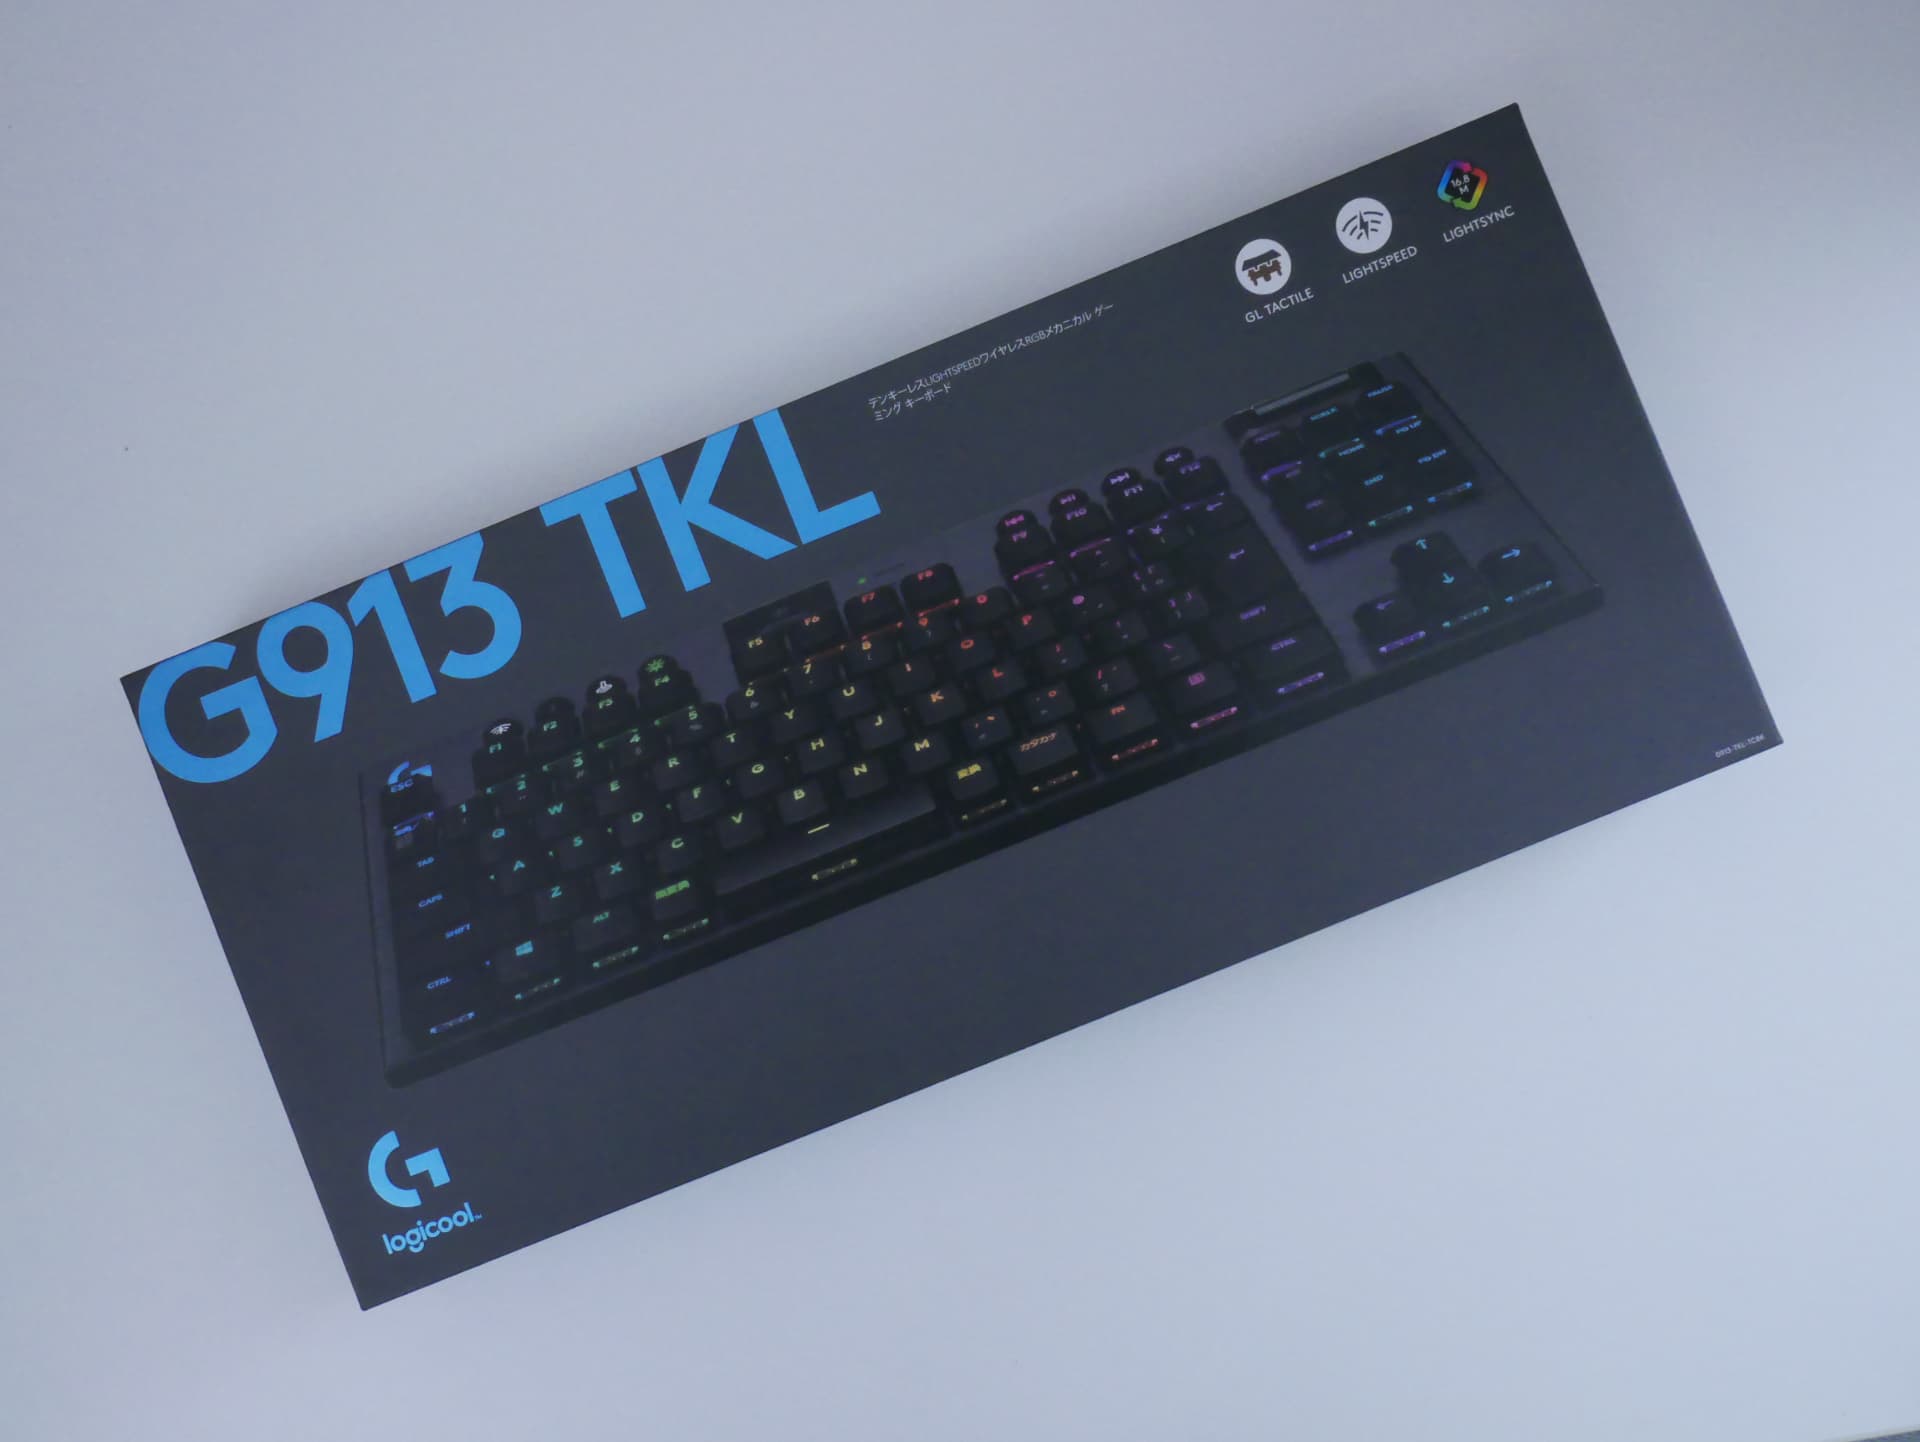 Logicool G913 TKL タクタイル 新品 G913-TKL-TCBK - thinkev.com